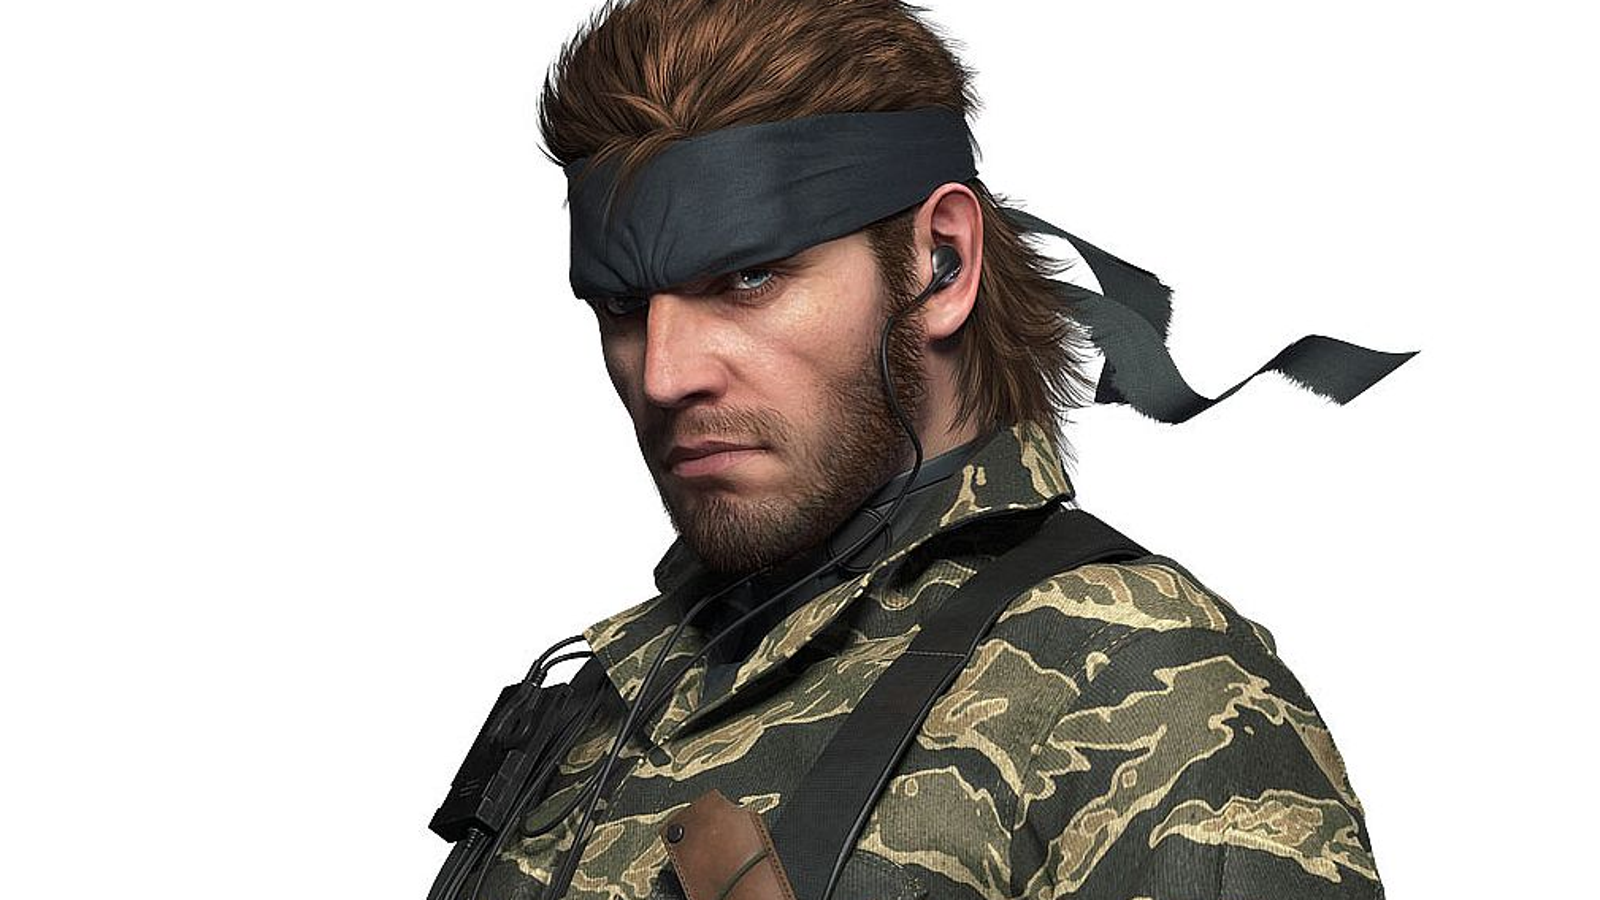 Сколько лет расулу биг босс. Биг босс MGS 3. Биг босс МГС 4. Metal Gear Солид Снейк. MGS 5 Биг босс с банданой.